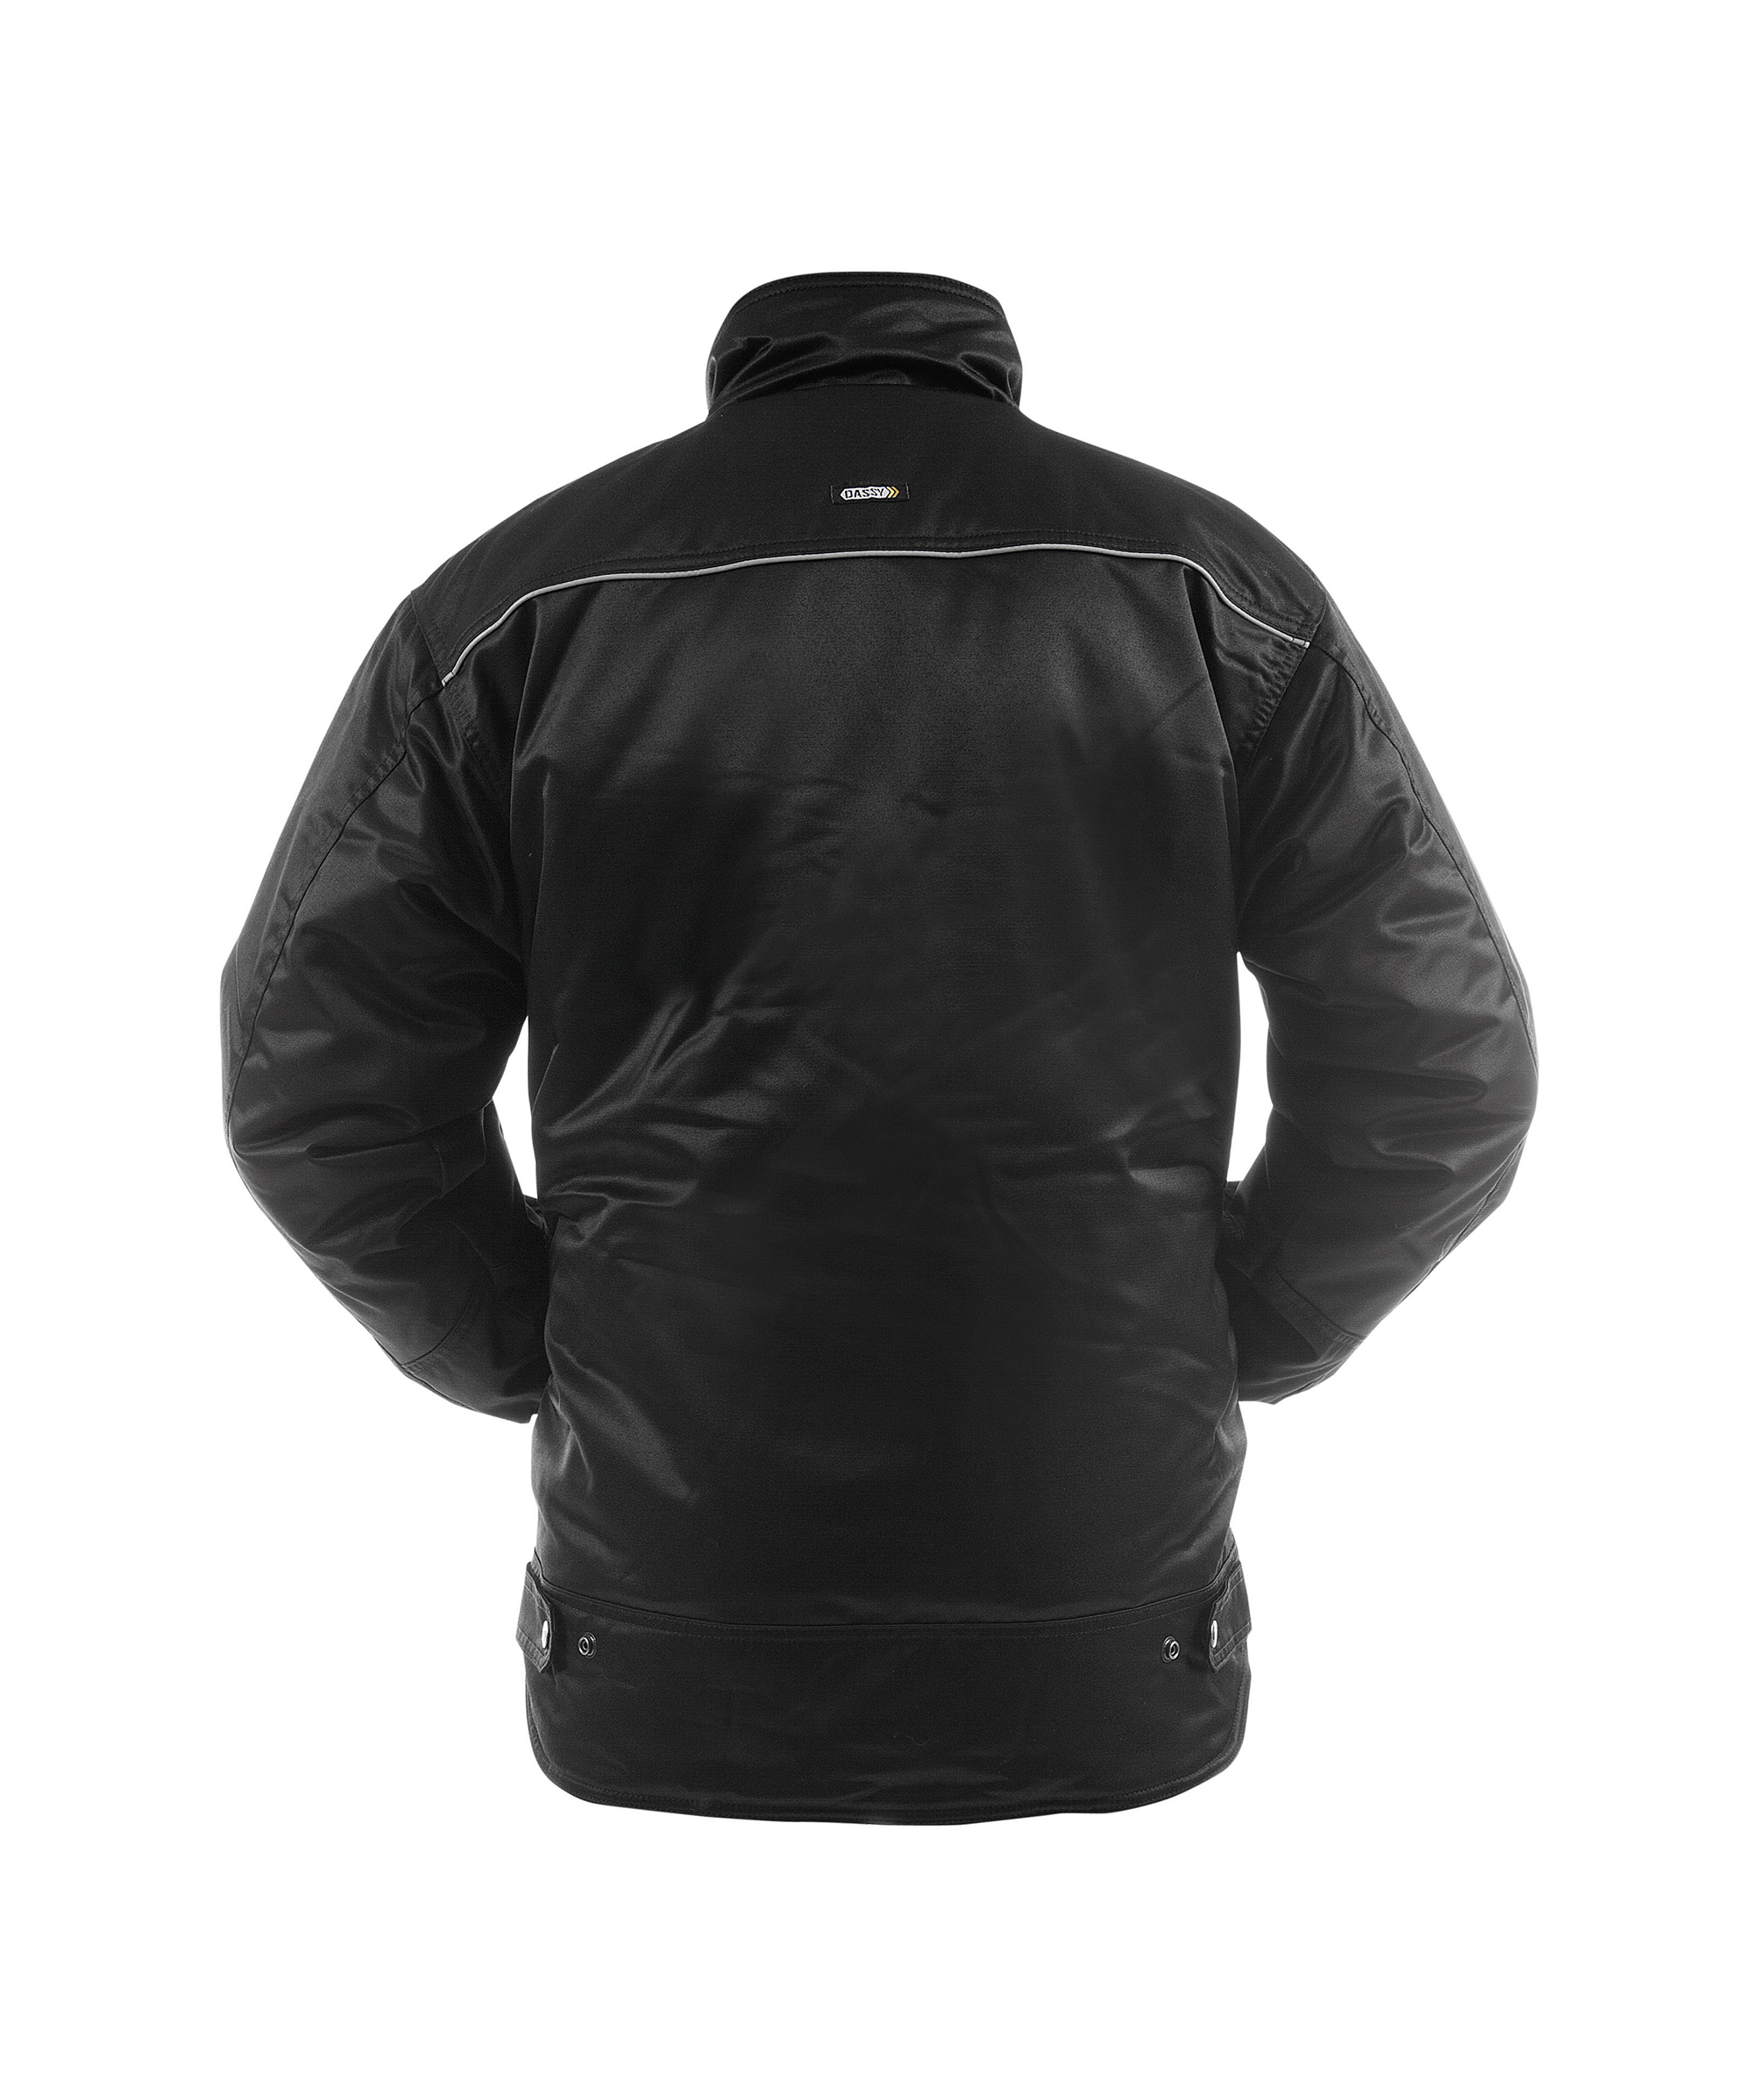 chatel_beaver-winter-jacket_black_back.jpg